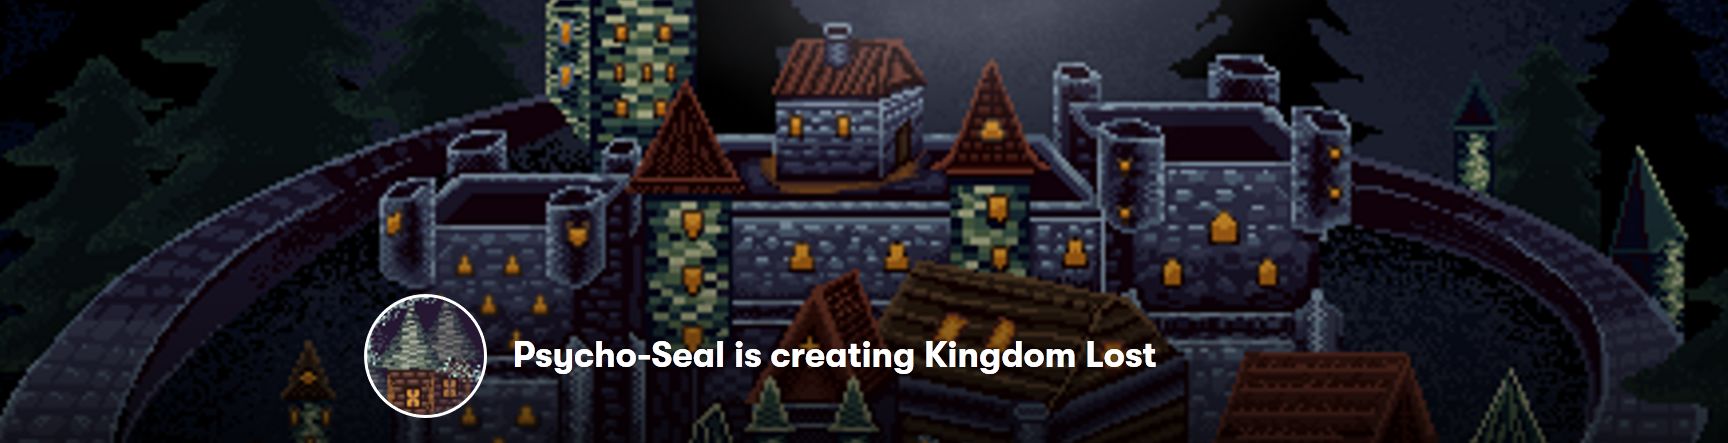 Download Kingdom Lost - Version 0.4 by Psycho-Seal